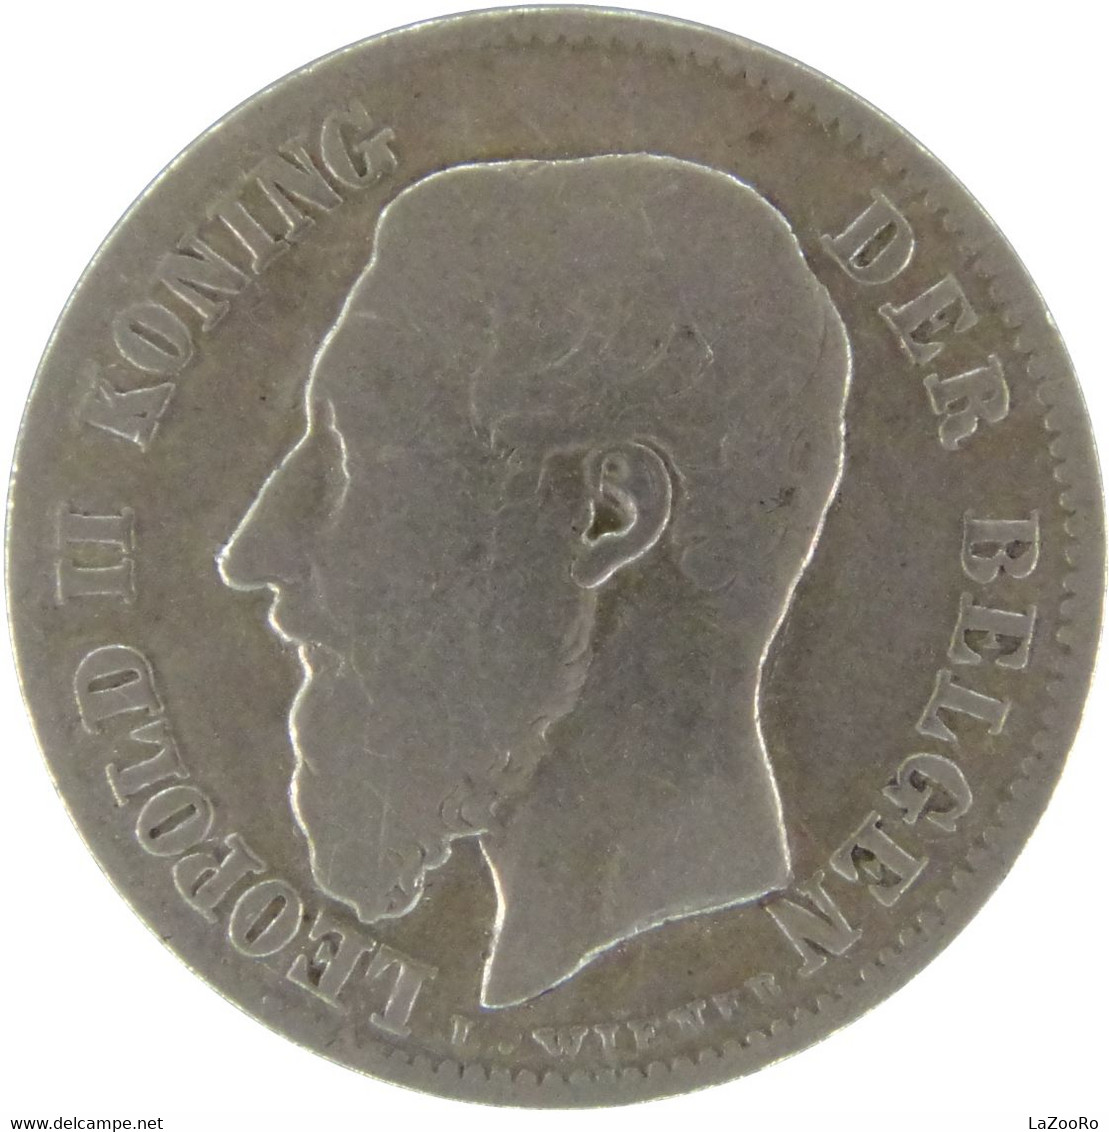 LaZooRo: Belgium 50 Centimes 1898 F / VF - Silver - 50 Cents